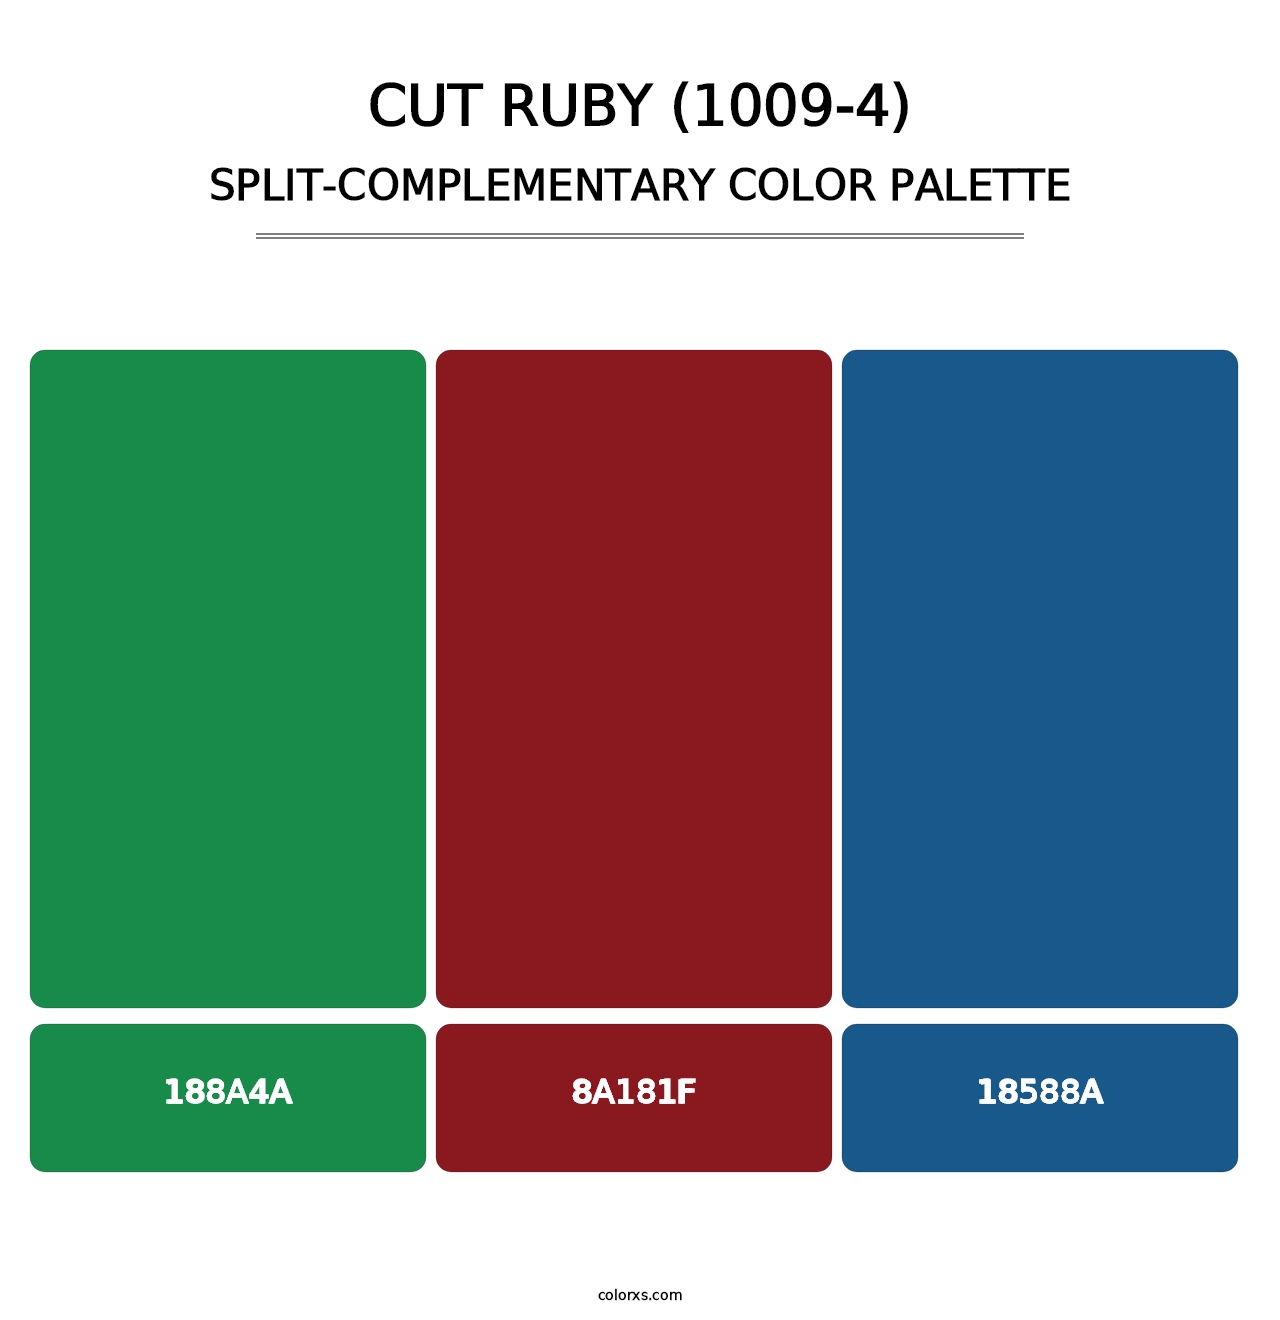 Cut Ruby (1009-4) - Split-Complementary Color Palette